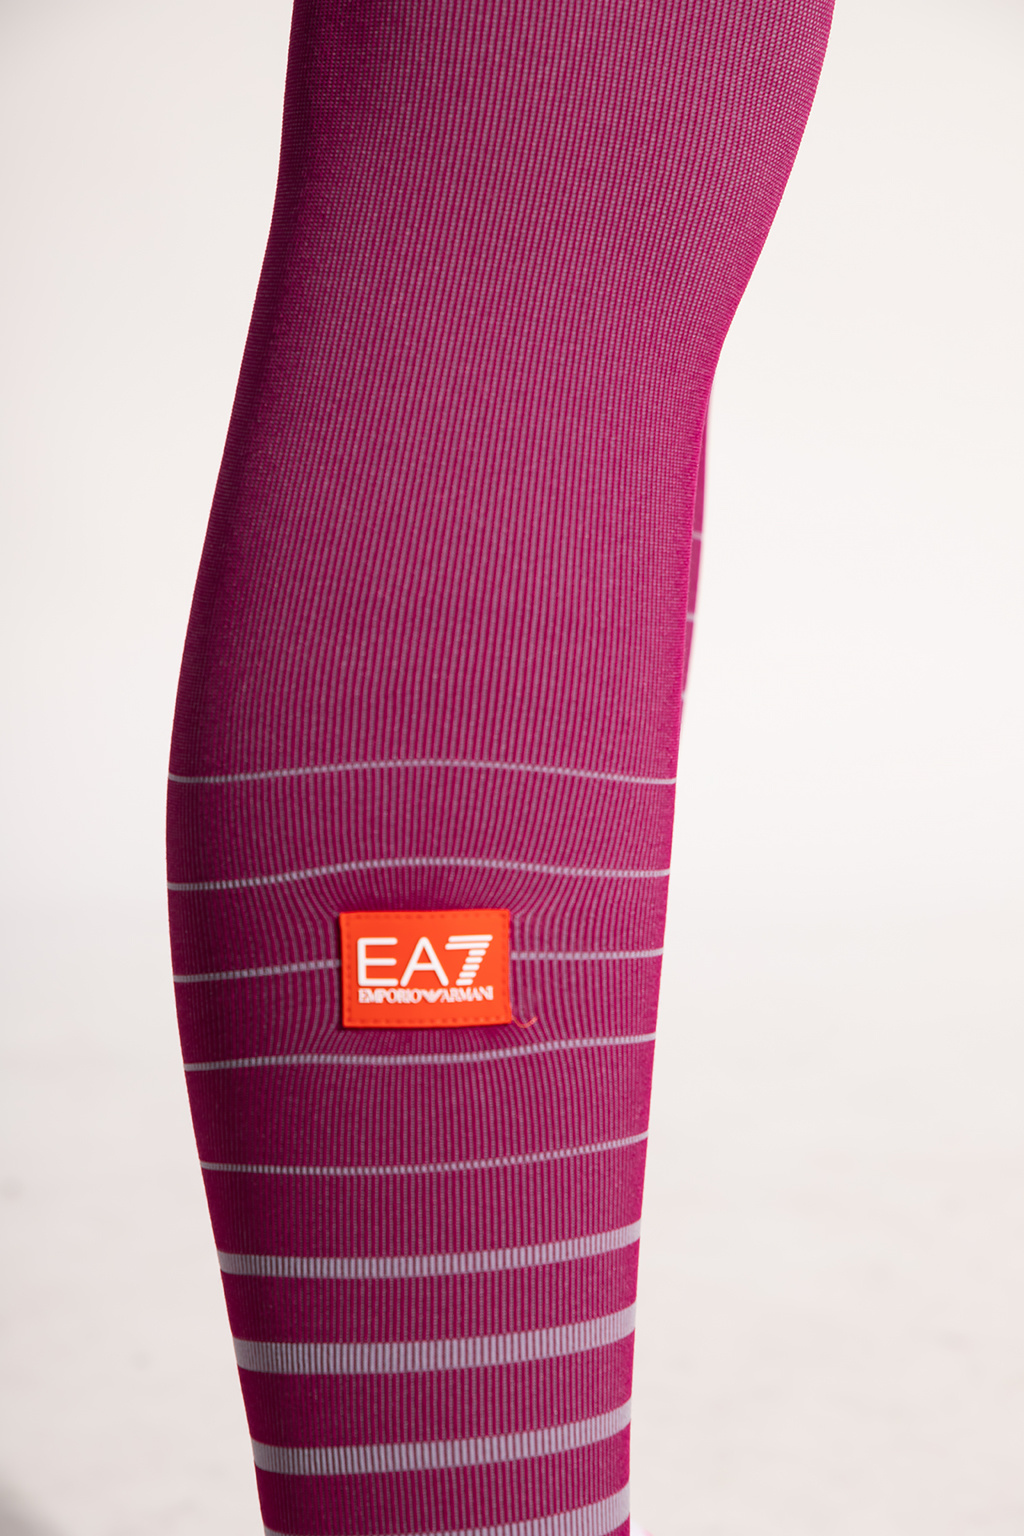 EA7 Emporio Armani Leggings with stitching